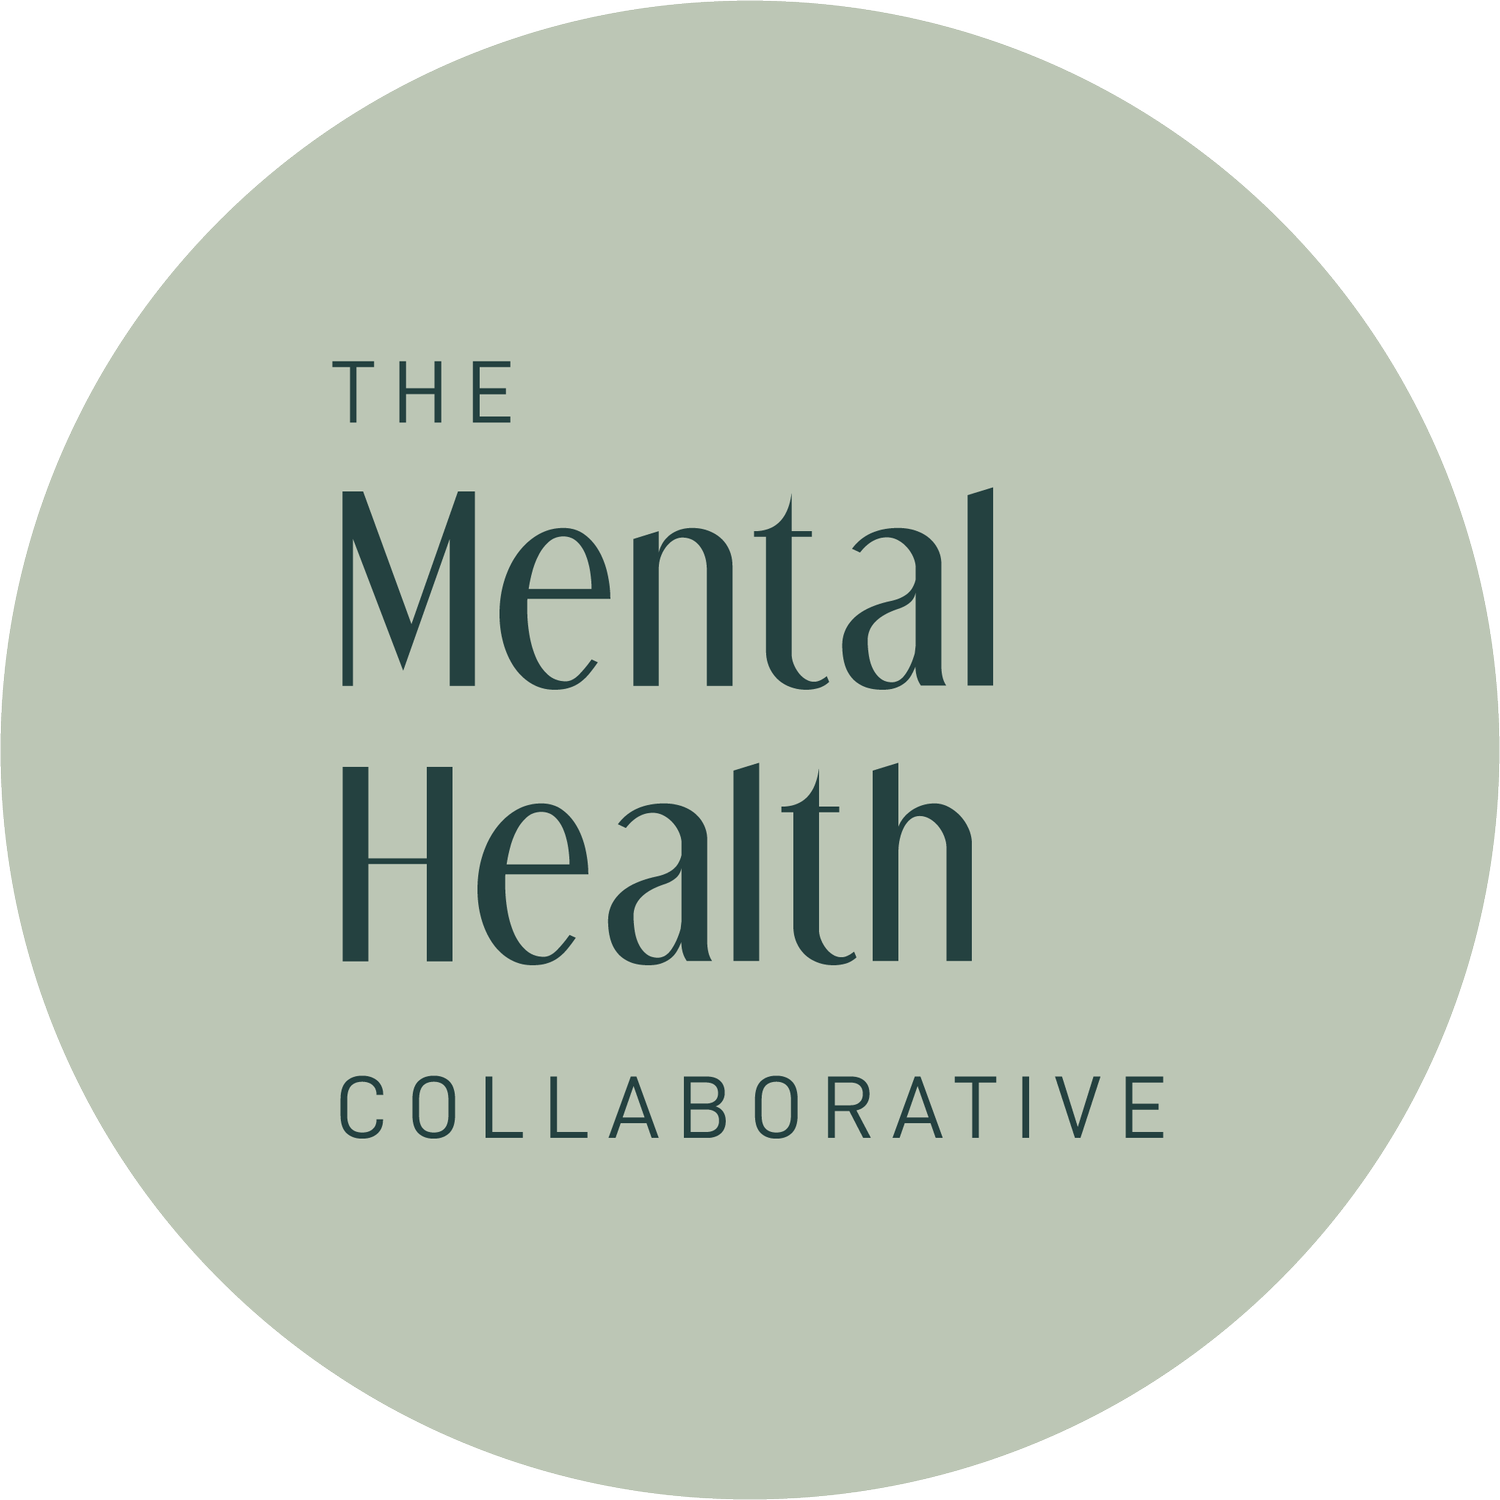 The Mental Health Collaborative